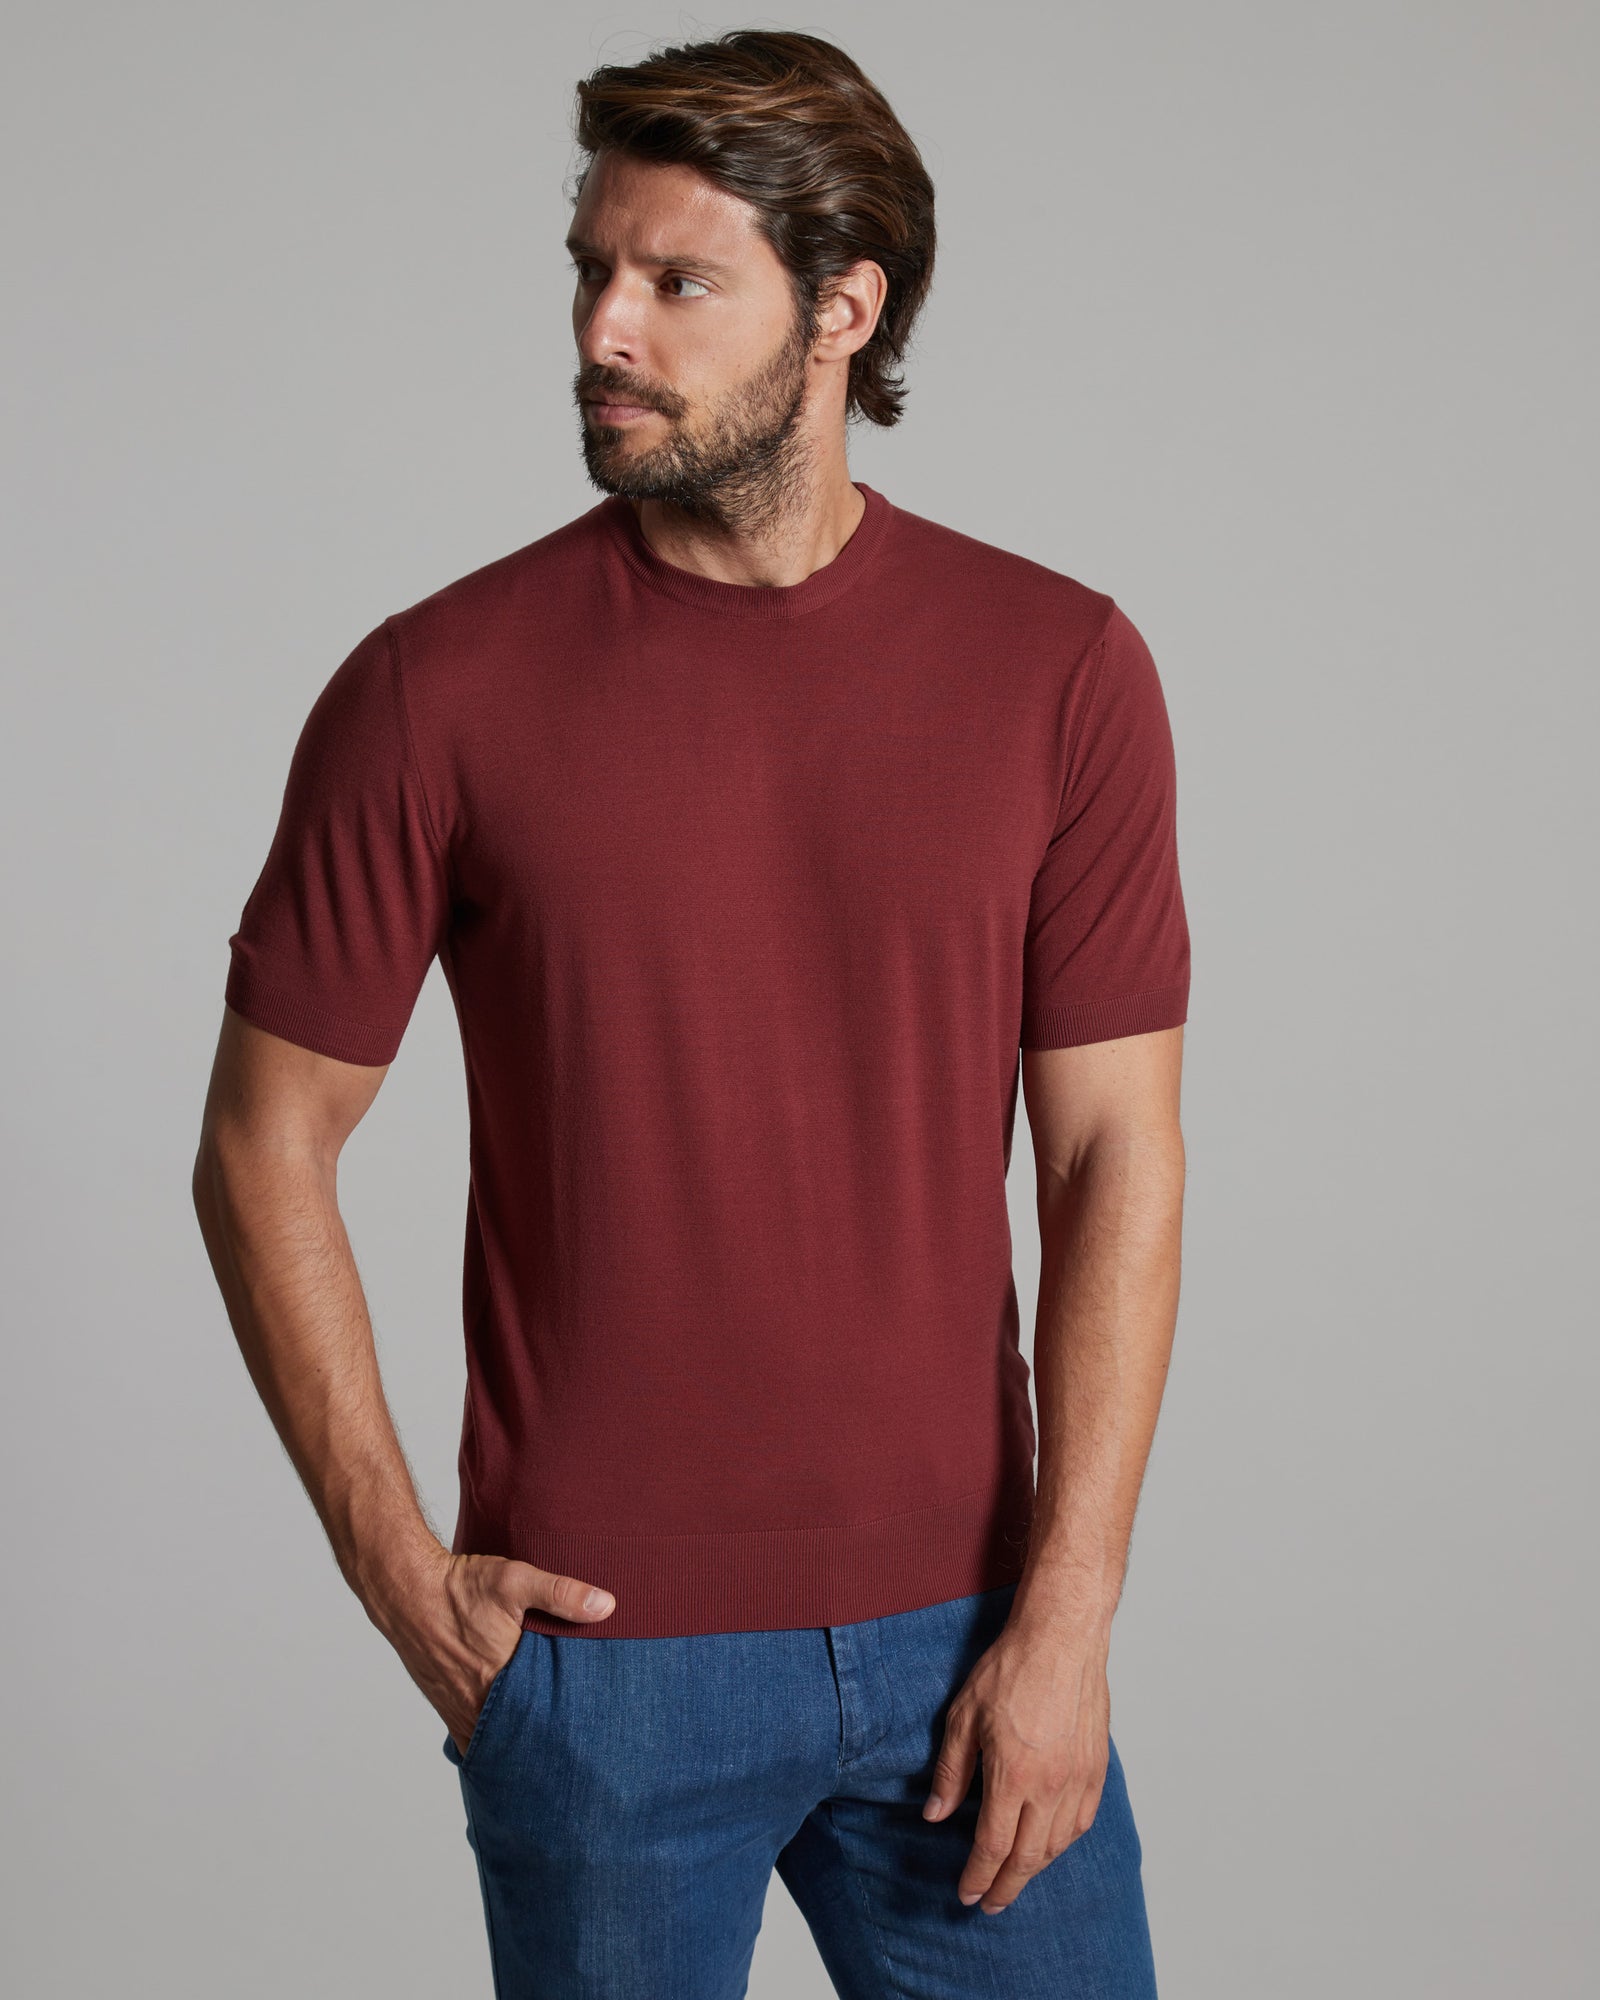 T-shirt in Kid Wool 12.8 rossa